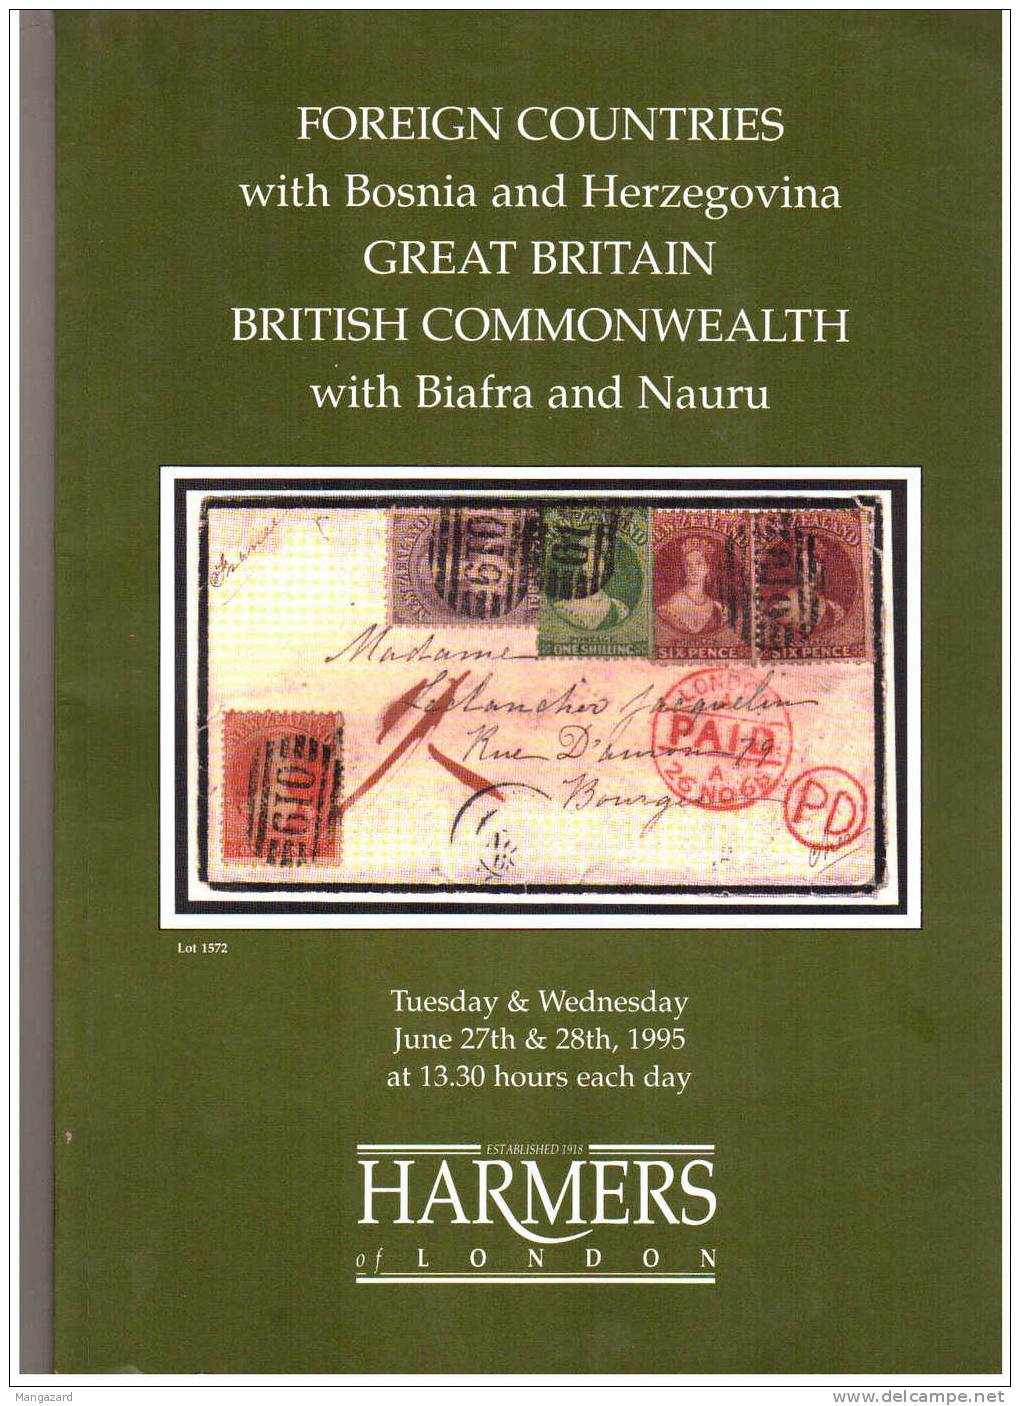 Bosnia & Herzegovina, Biafra Nauru Sauddi Arabia  GB Etc HARMERS 1995 72 Plates - Auktionskataloge